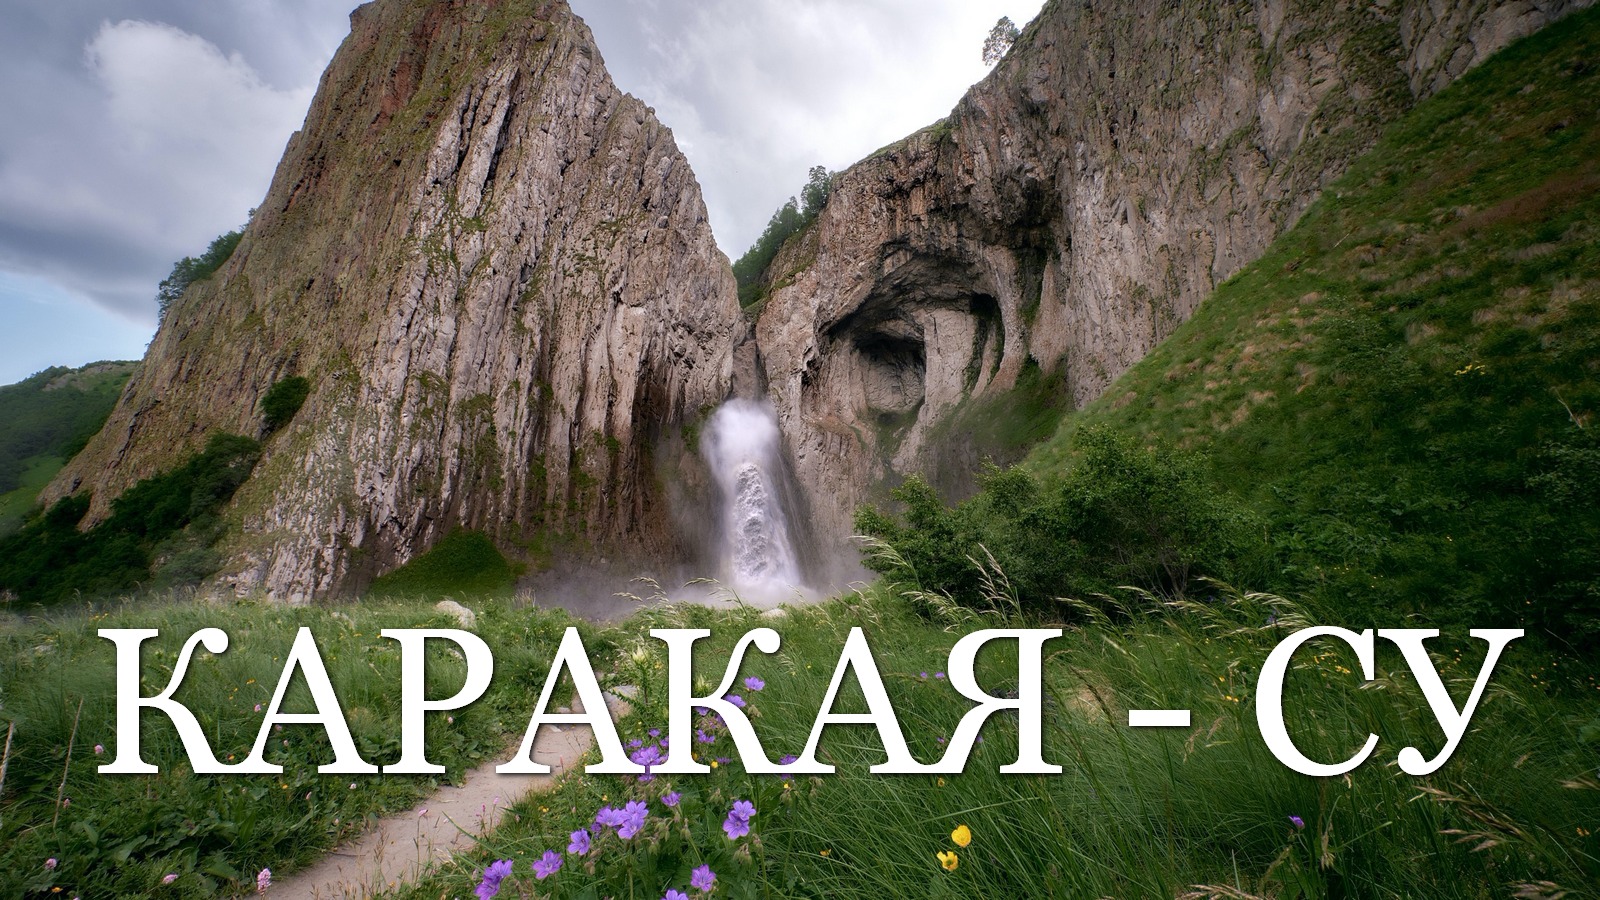 Водопад Каракая-Су. Кабардино-Балкария